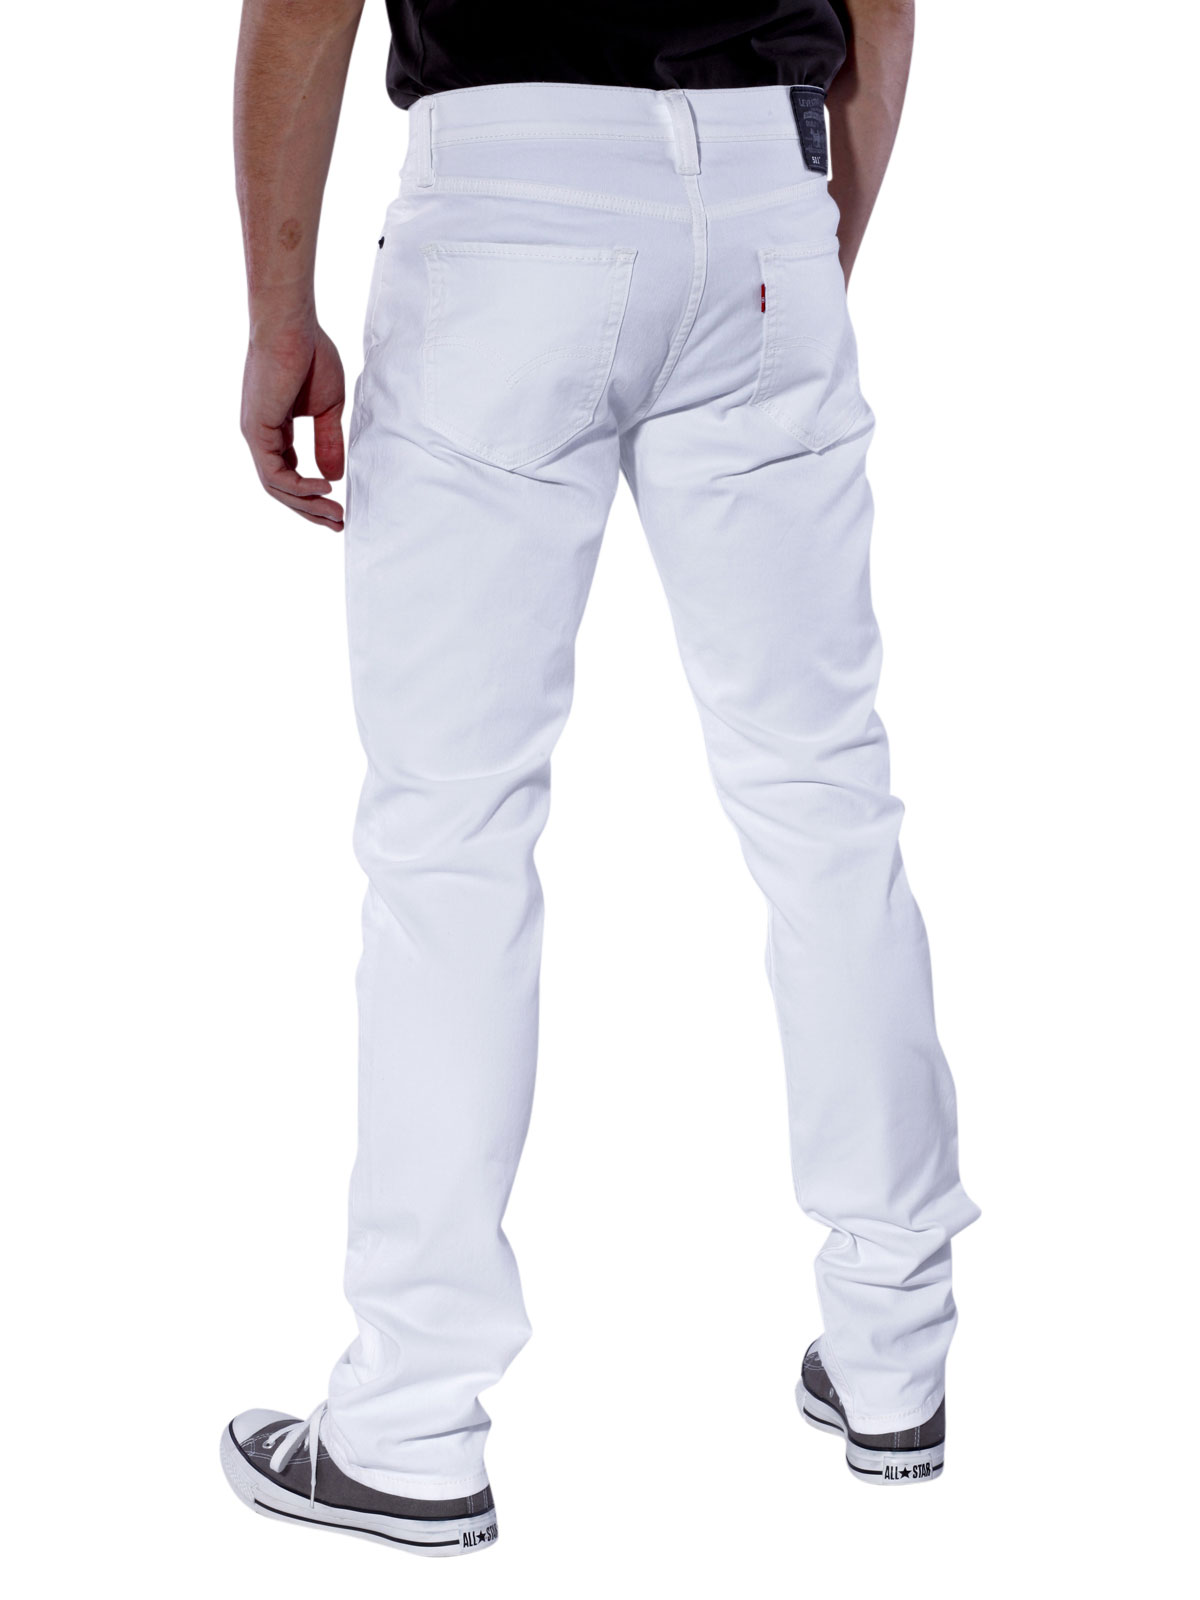 levi's 511 white jeans